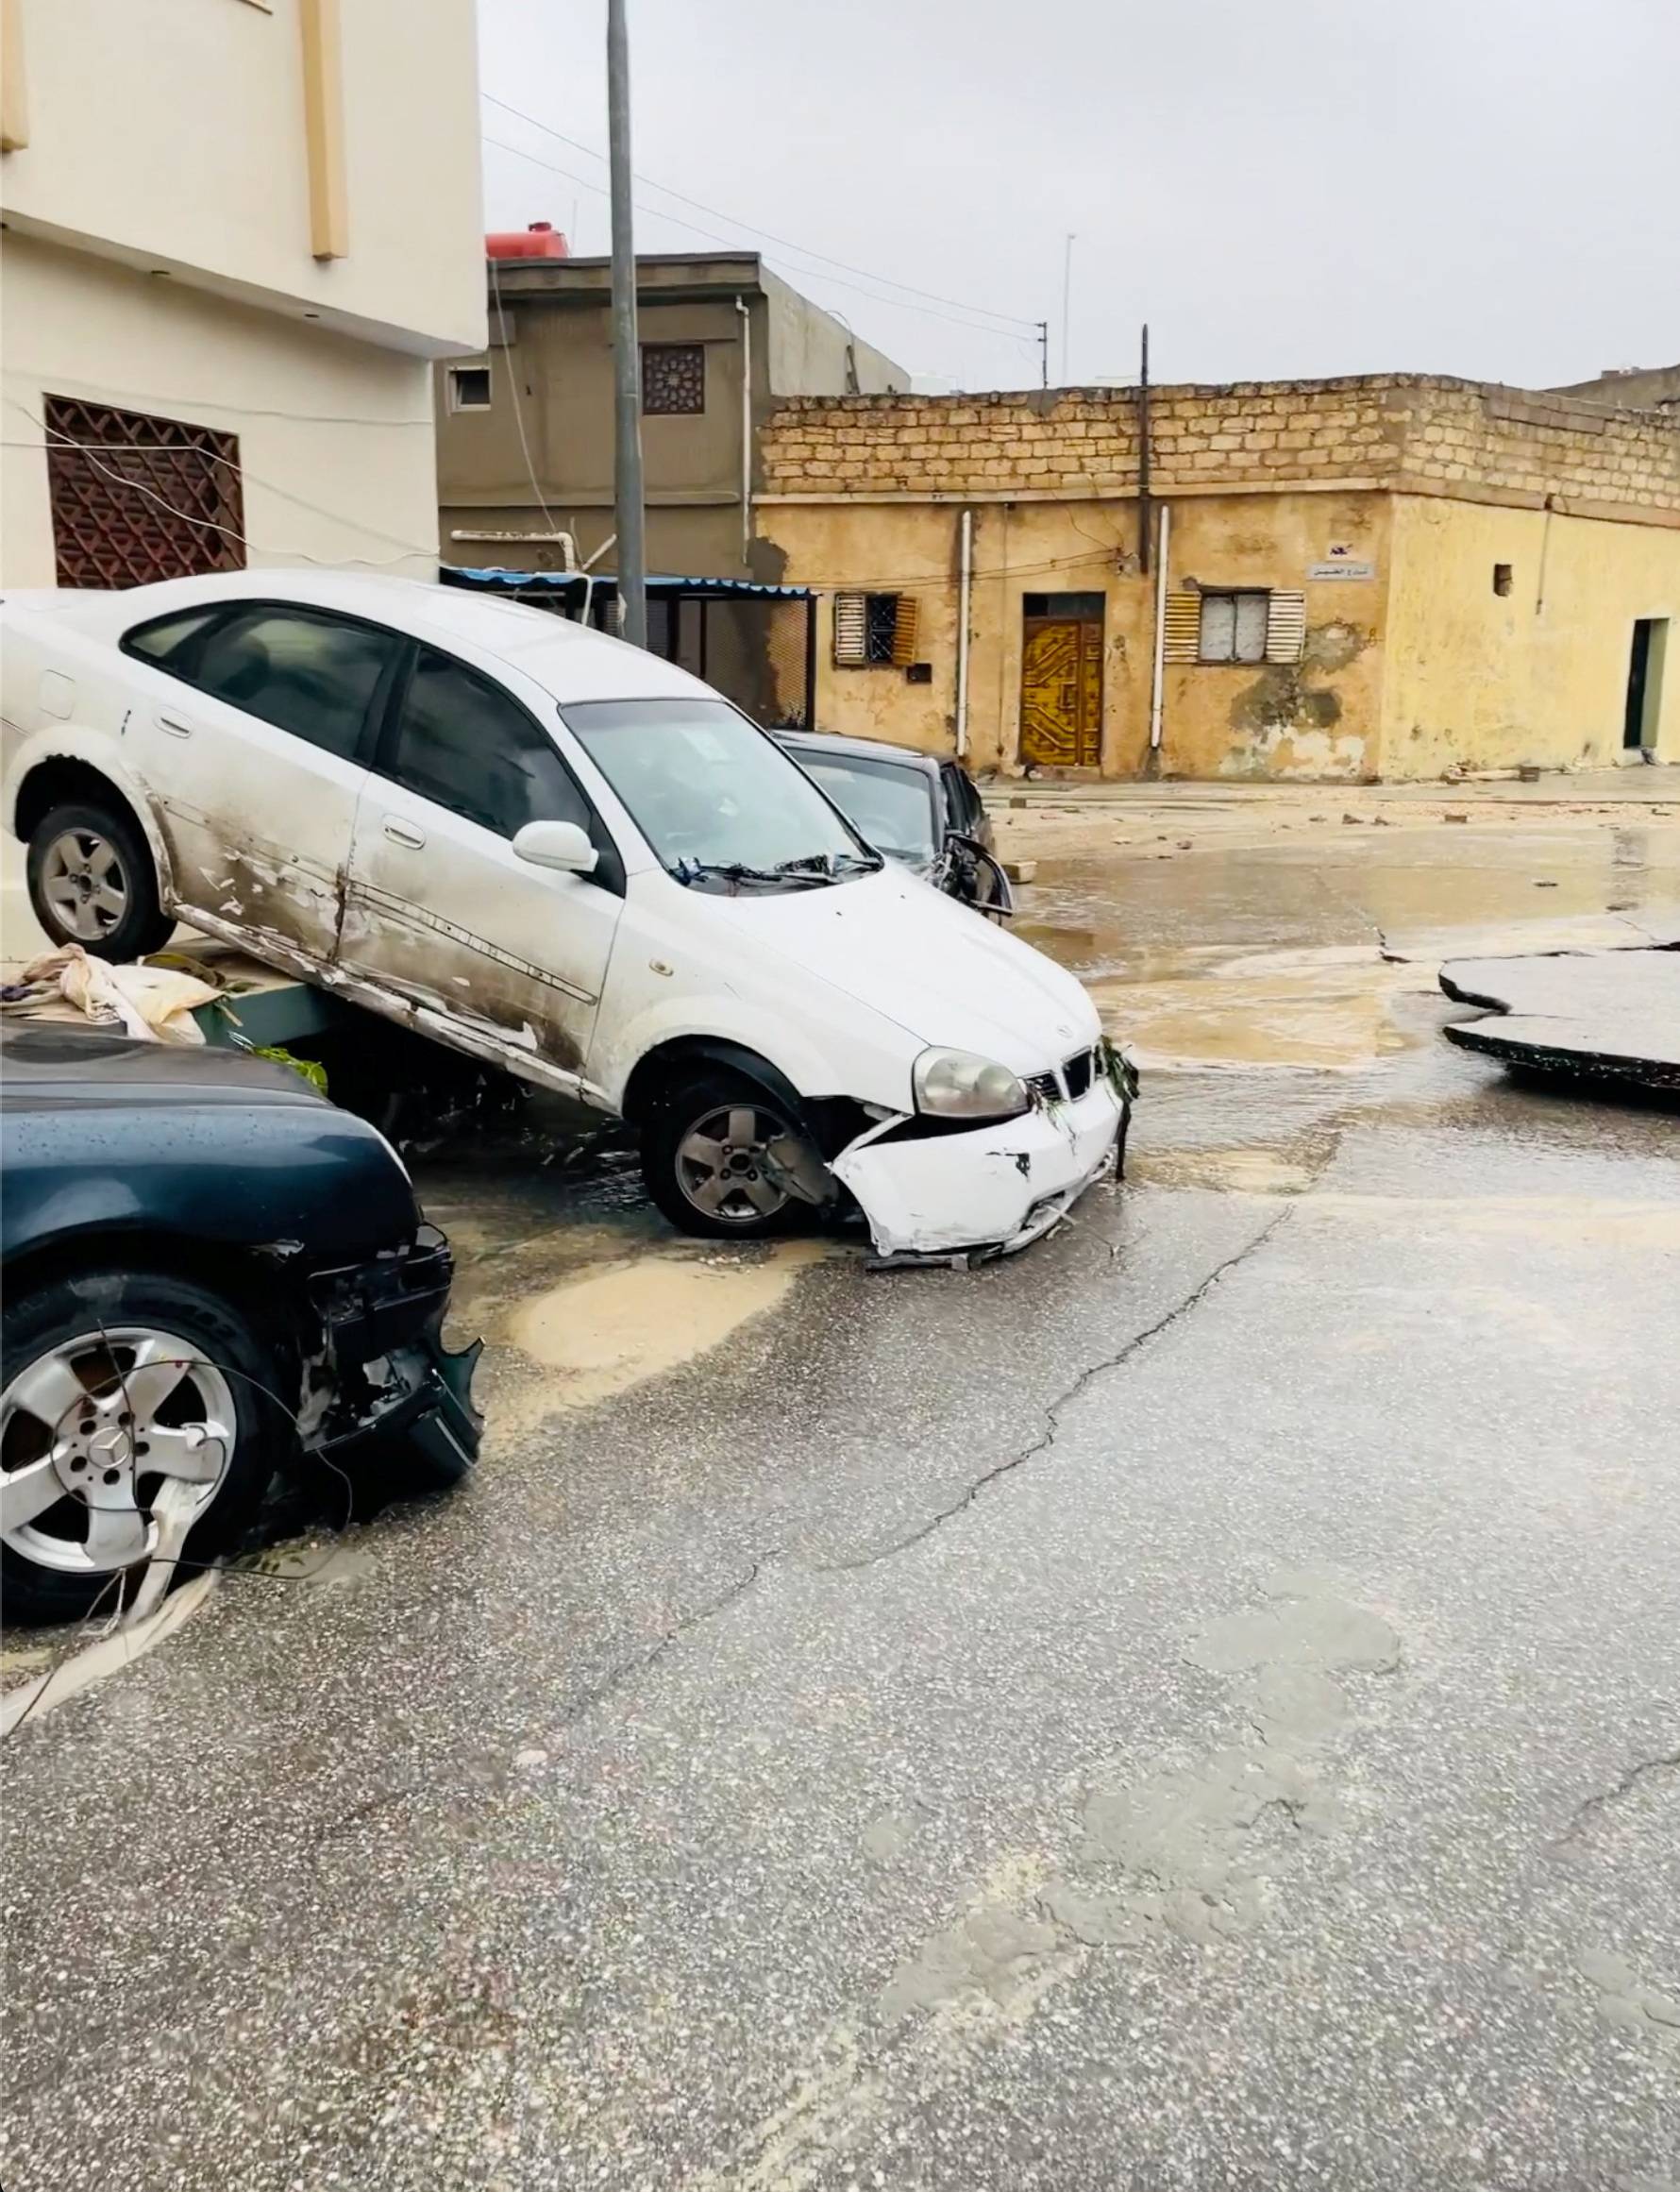 A powerful storm and heavy rainfall hit Libya